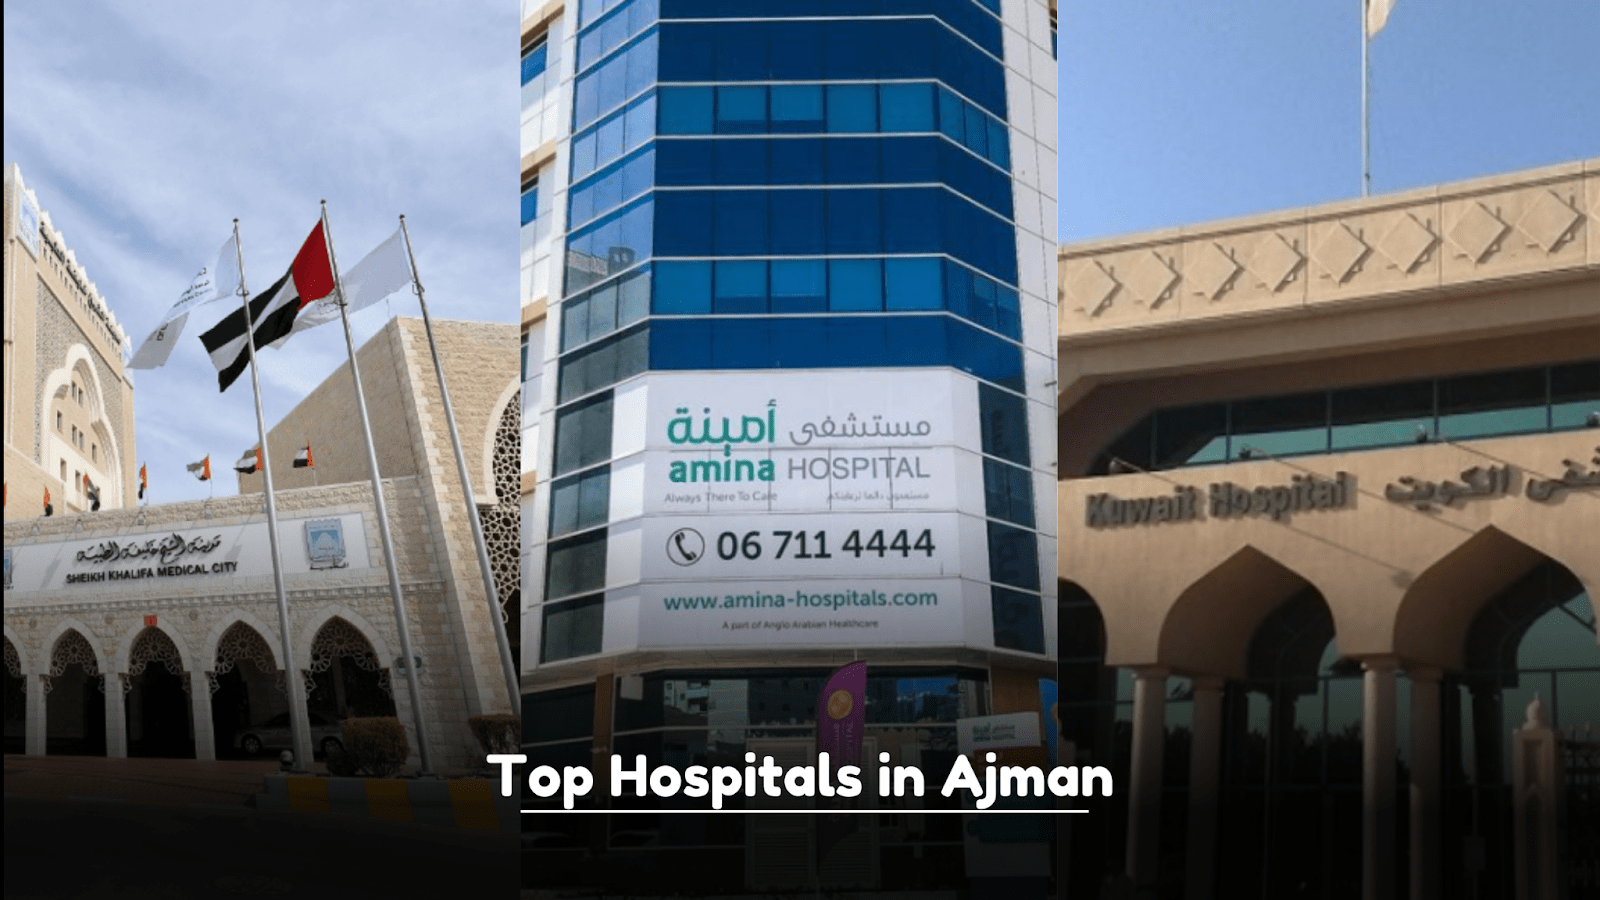 List of Top Hospitals in Ajman